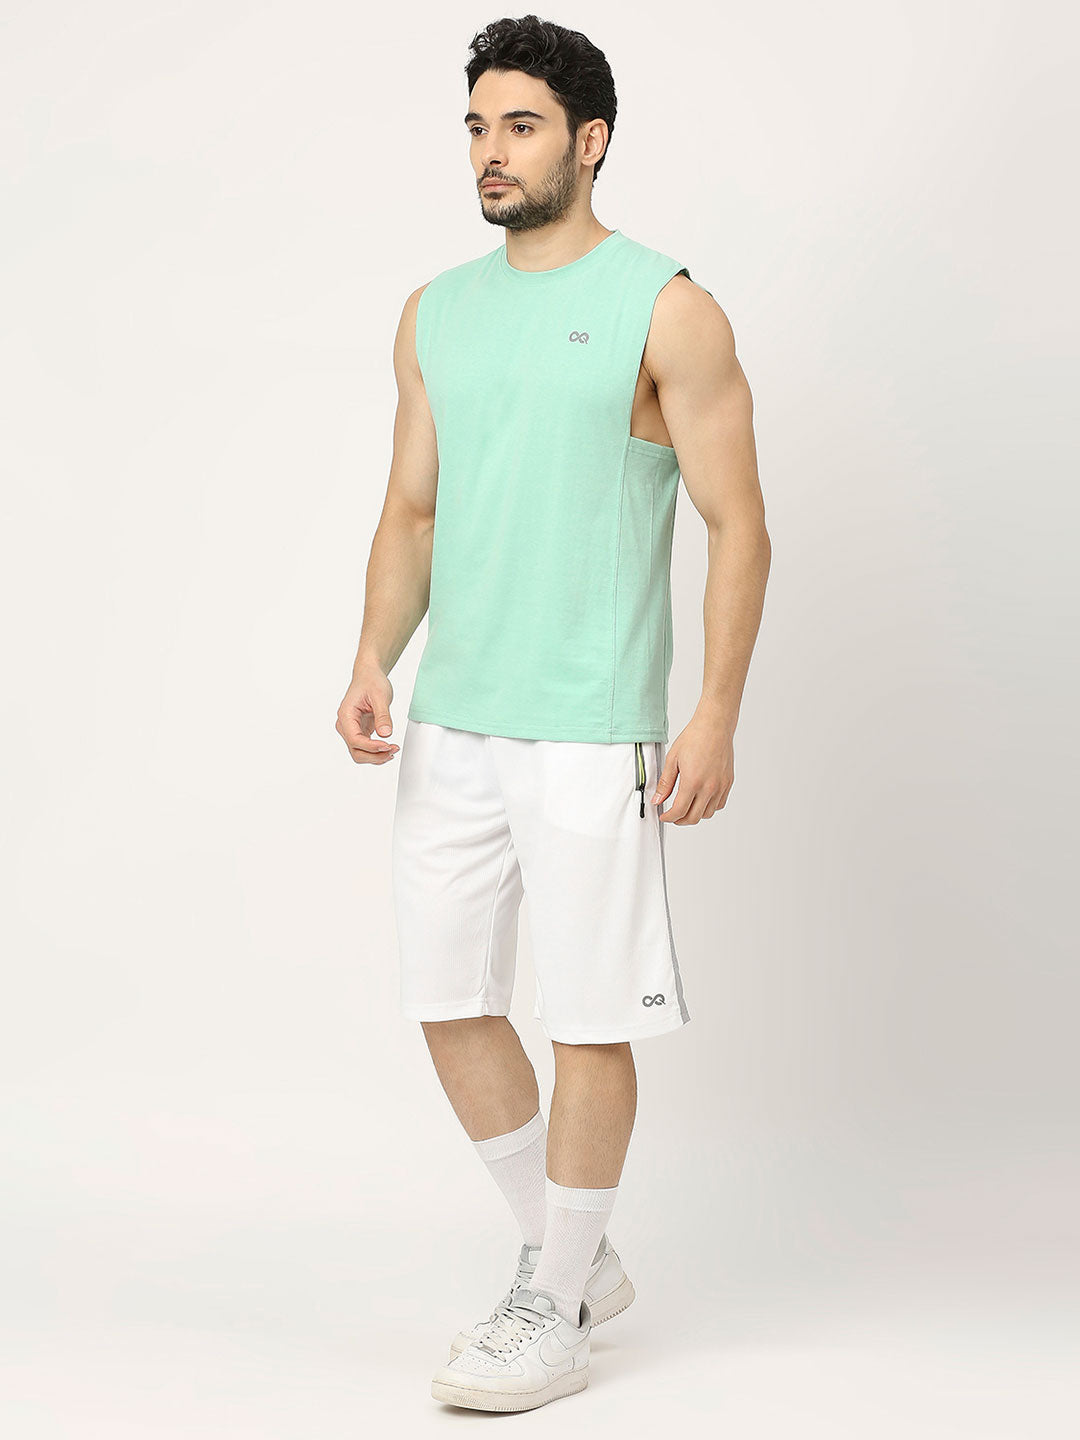 Men's Sports Vest - Mint Green